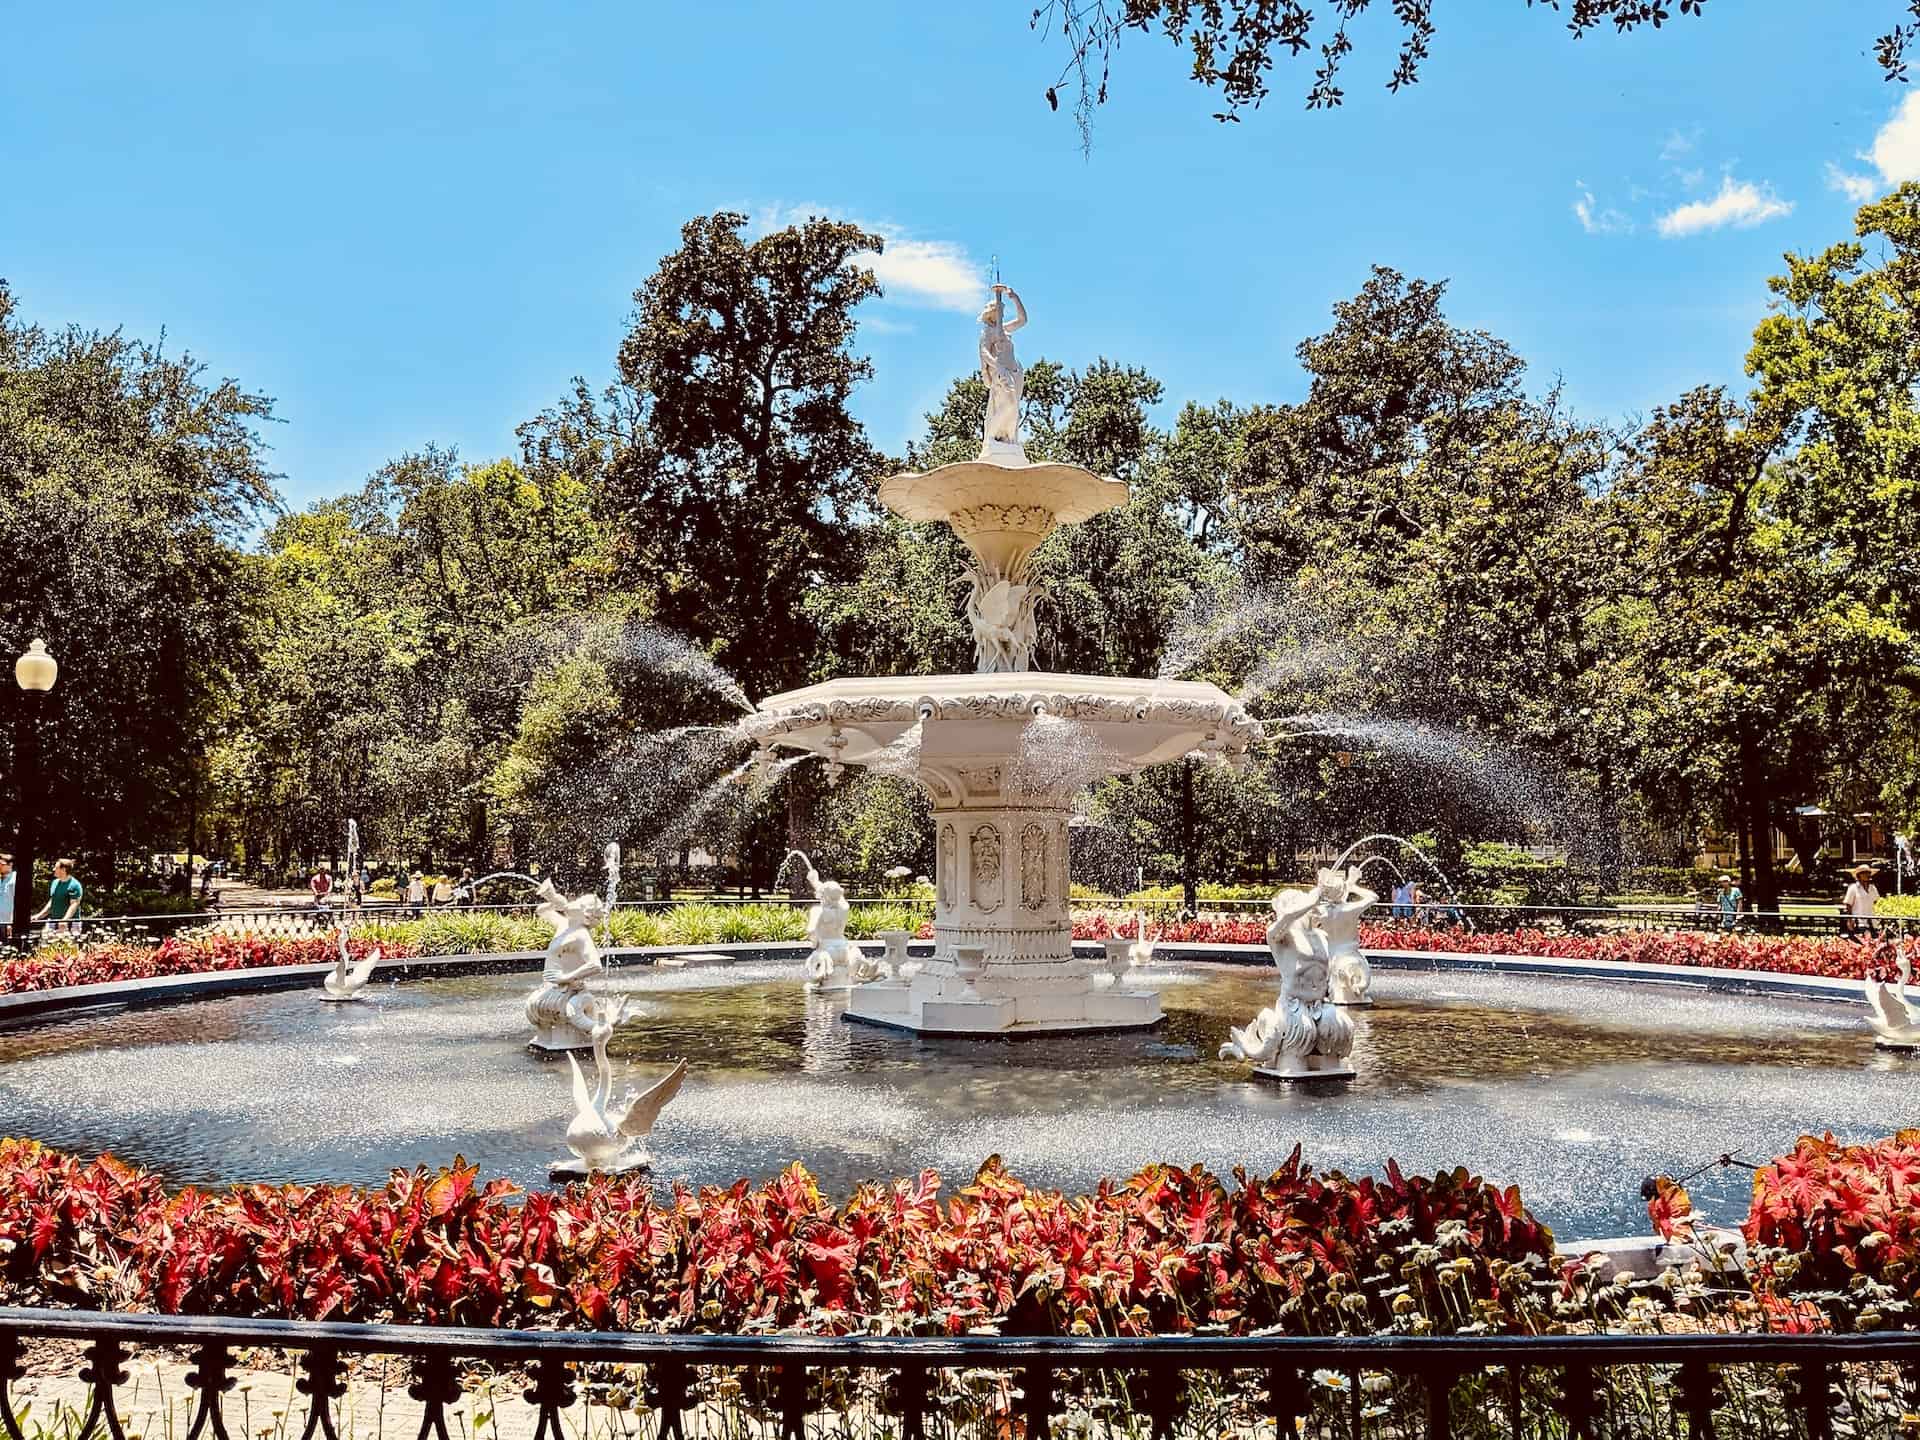 Best things to do in Savannah Georgia - Josh Calcanis - Forsyth Fountain by Philip Arambula on Unsplash